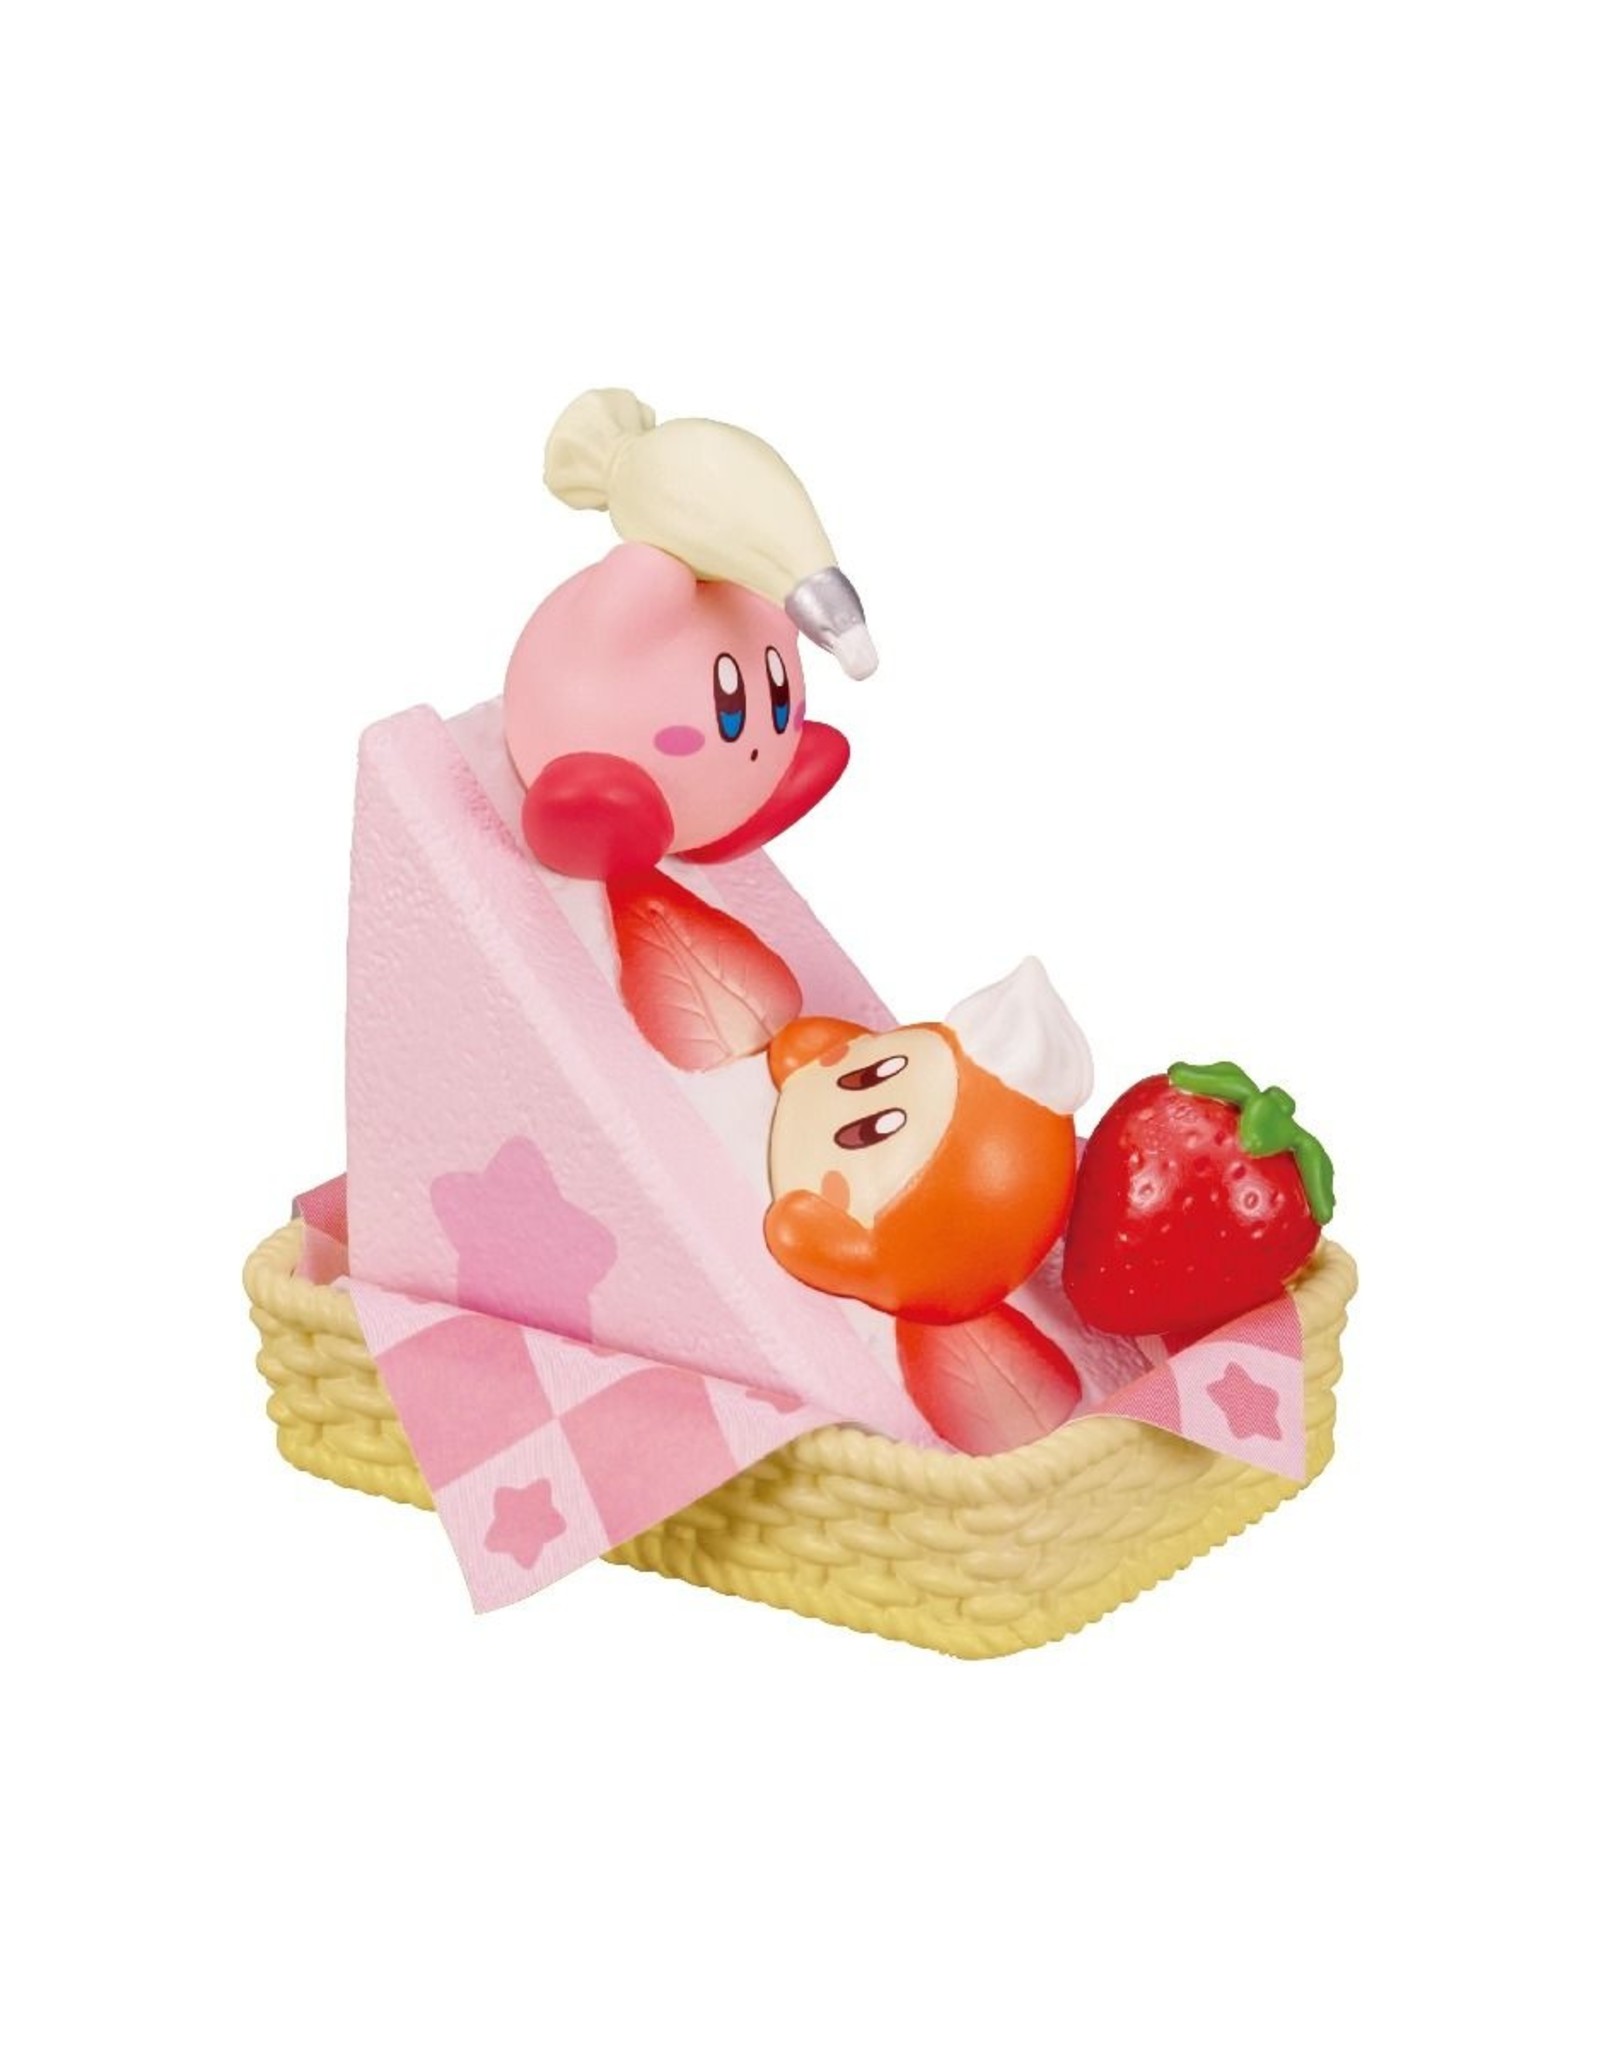 Kirby's Bakery Cafe Blind Box